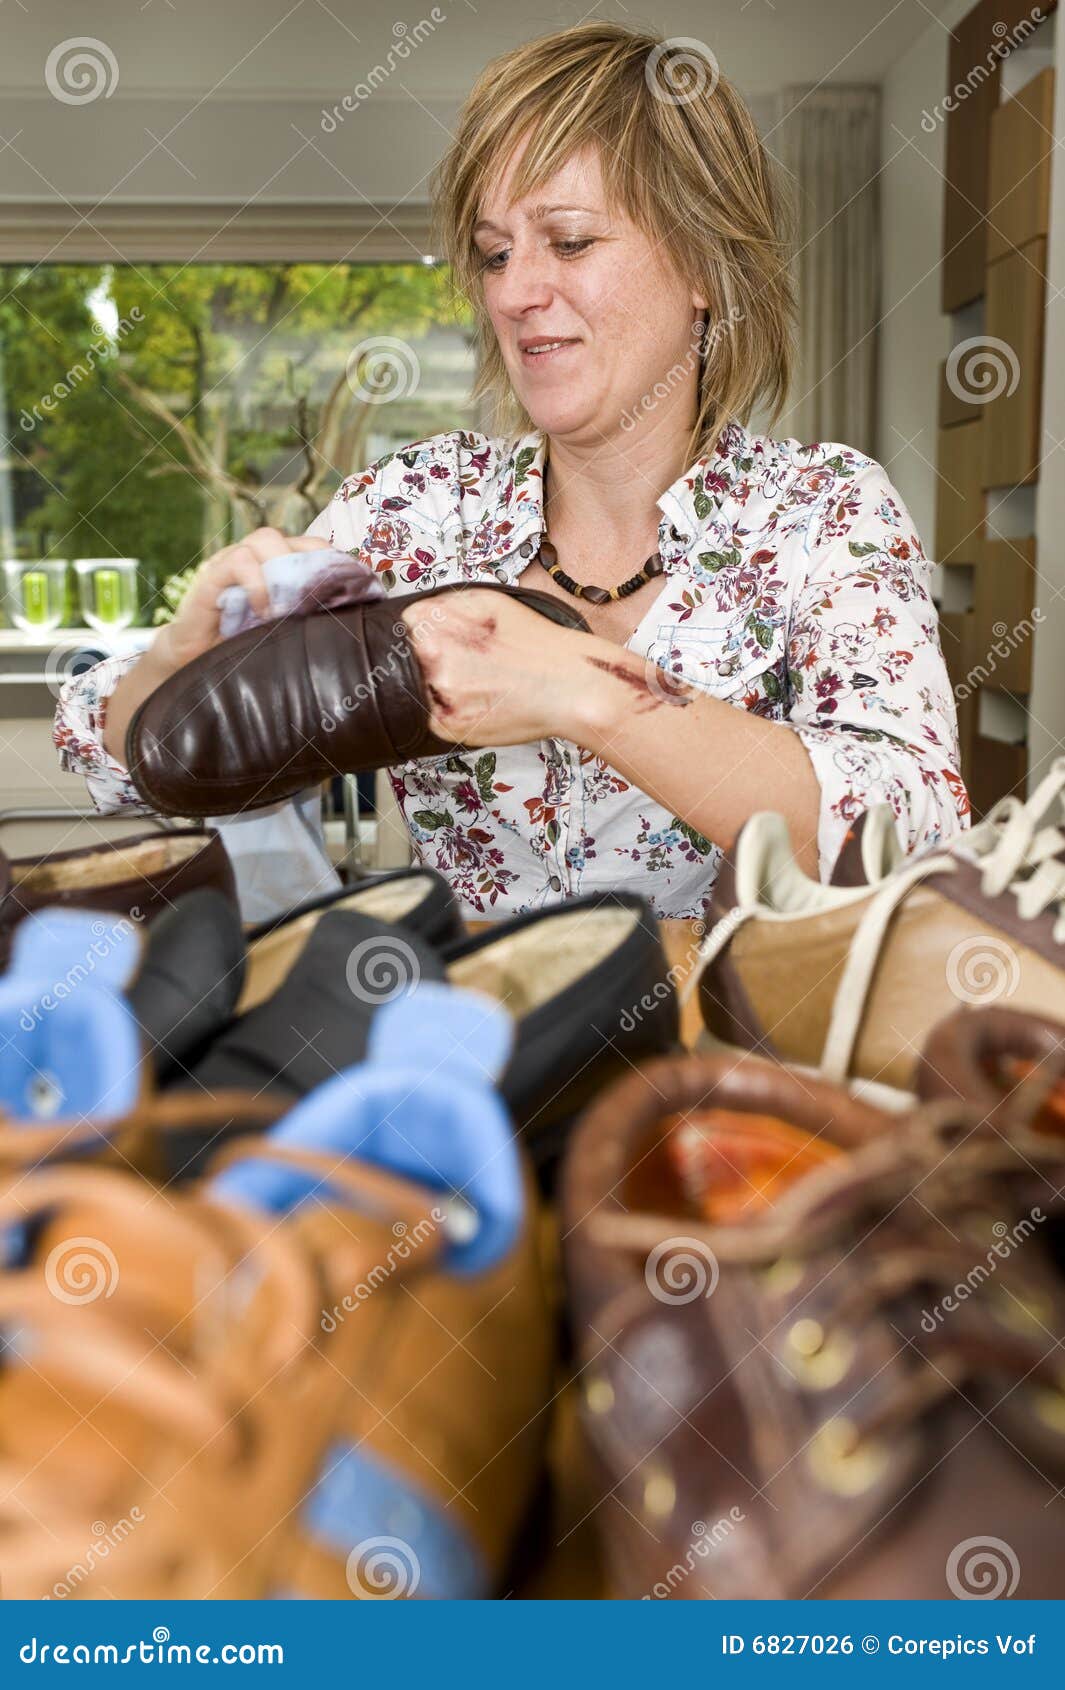 Polishing shoes stock photo. Image of rubbing, room, brown - 6827026